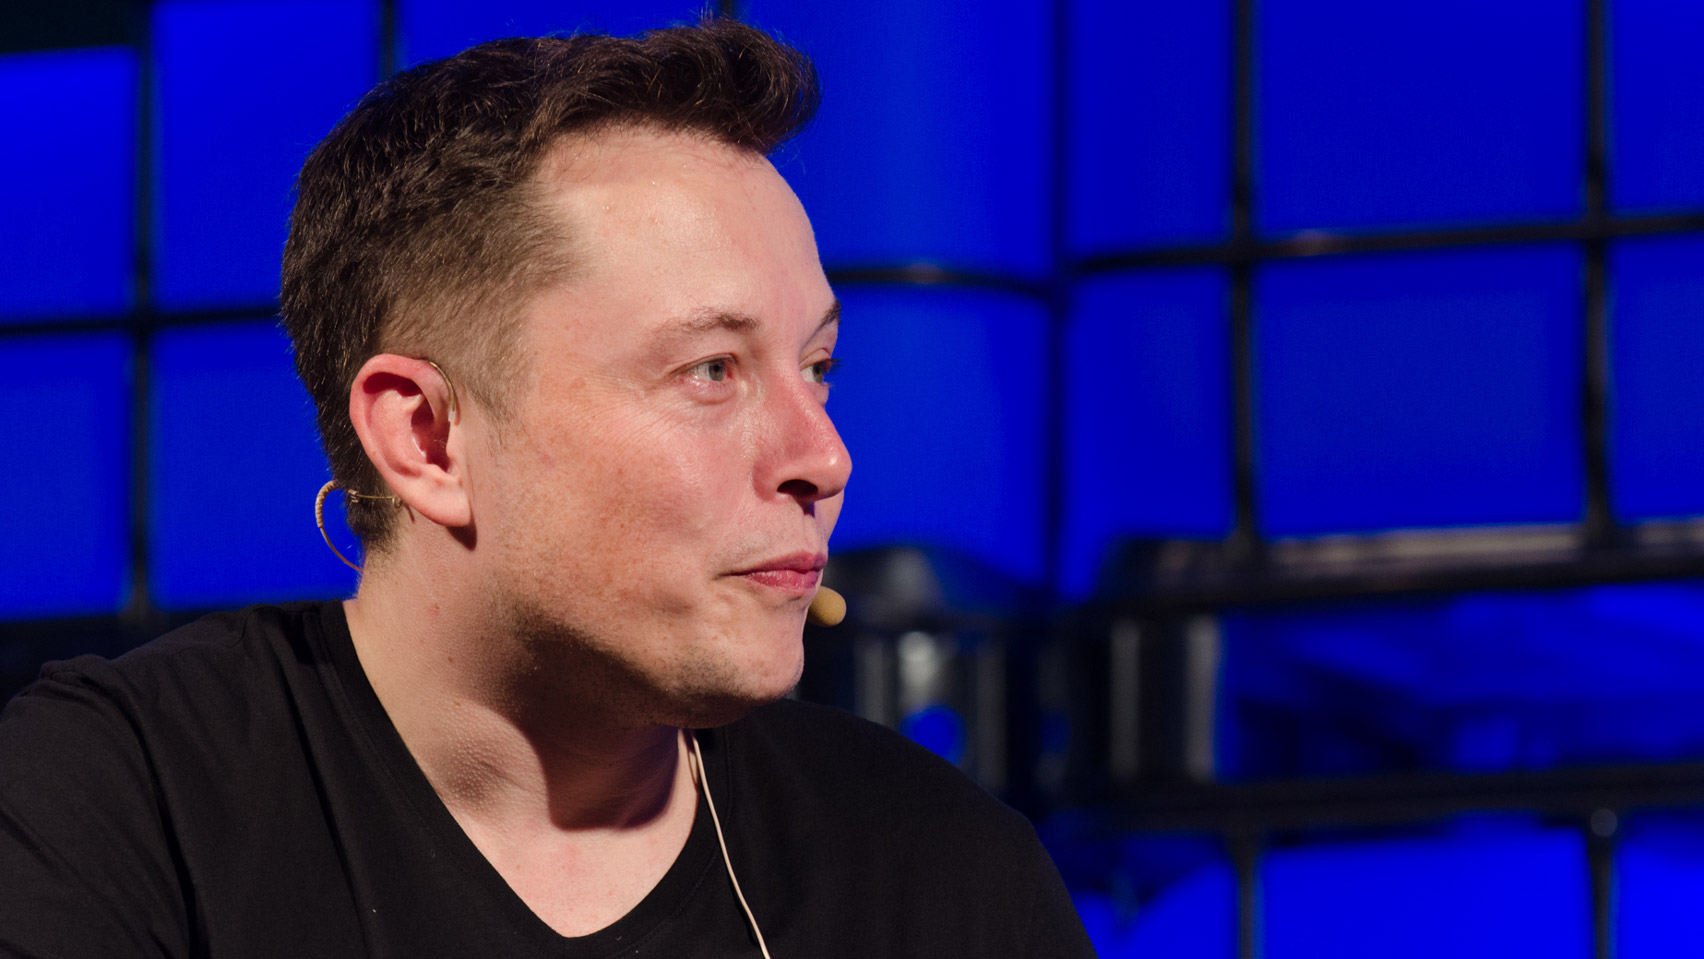 Elon Musk against blue background